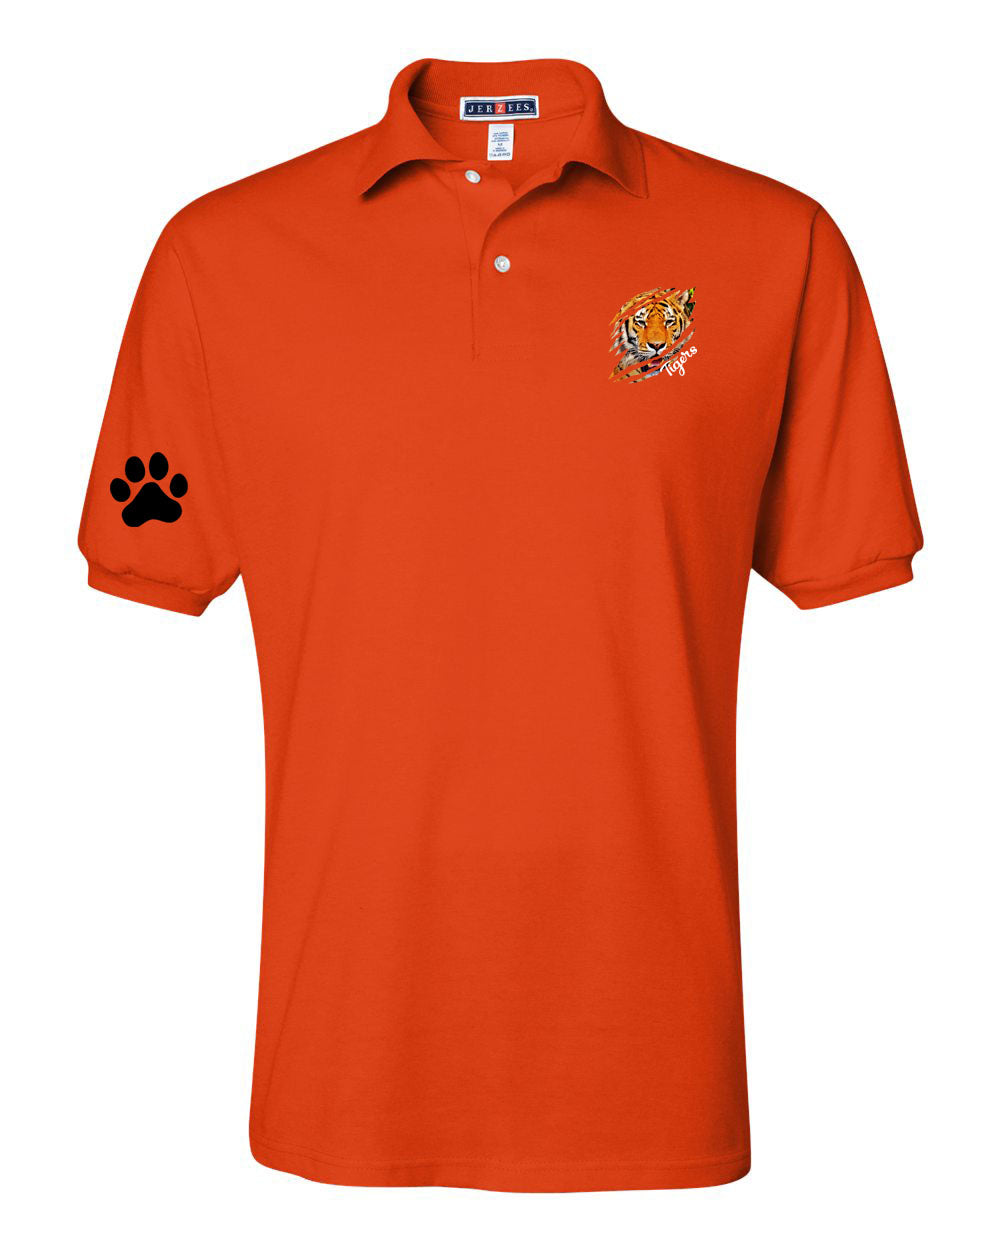 Lafayette Tigers design 10 Polo T-Shirt